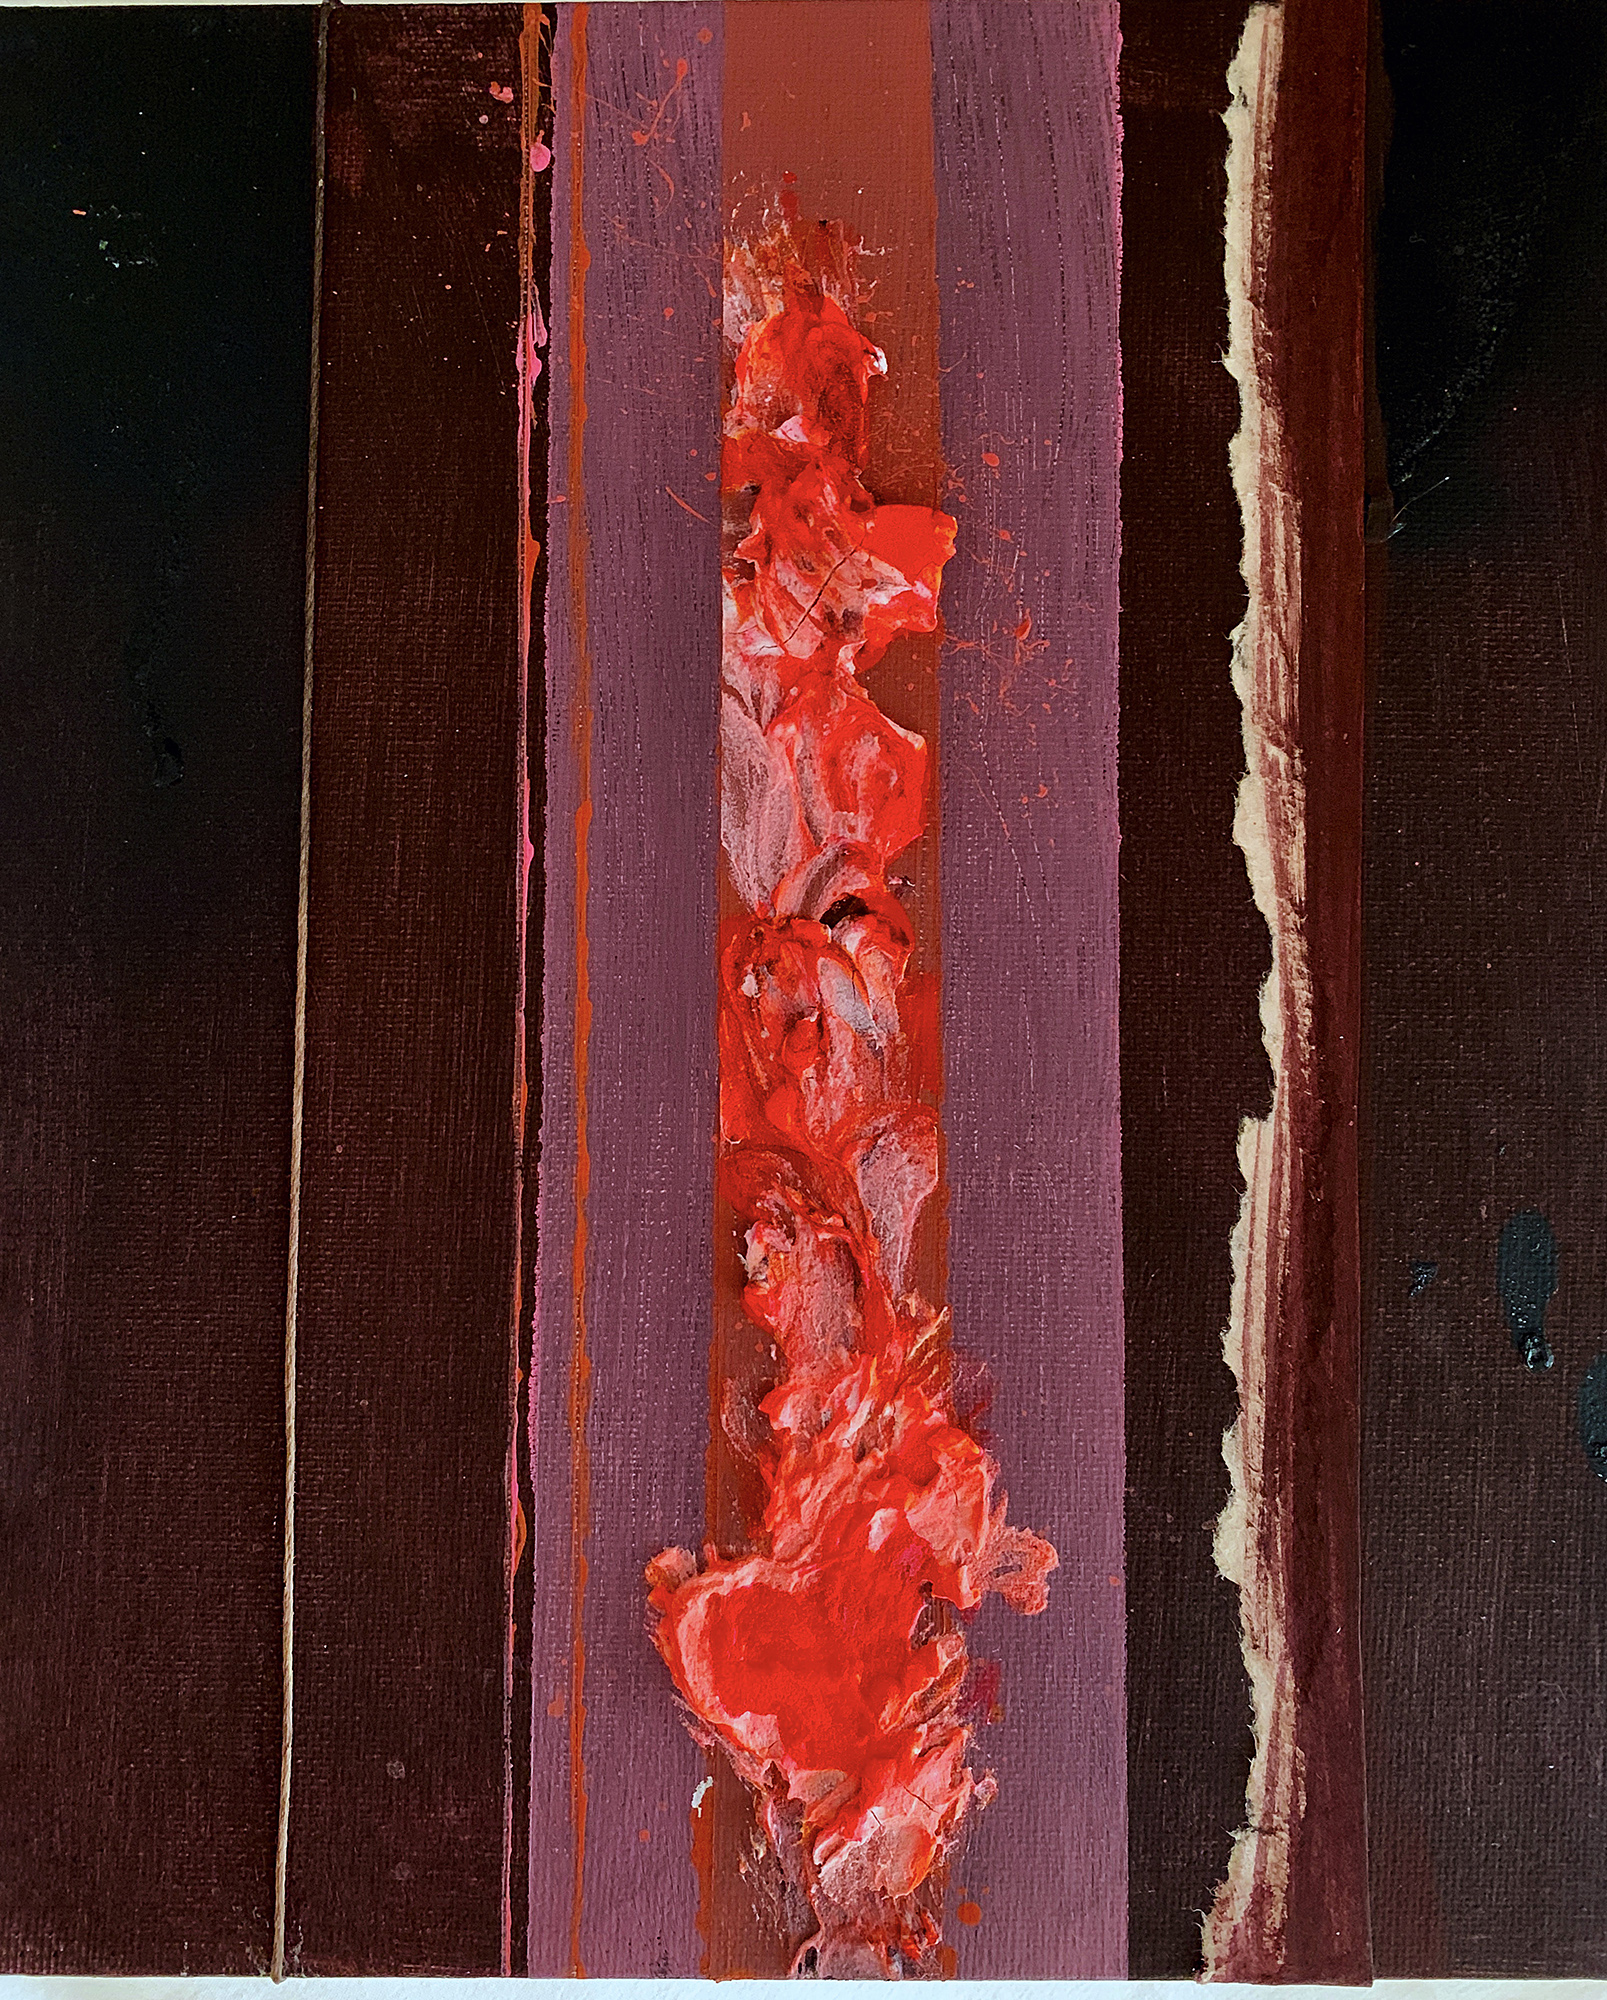 The Veil - Barnett Newman inspired collage painting